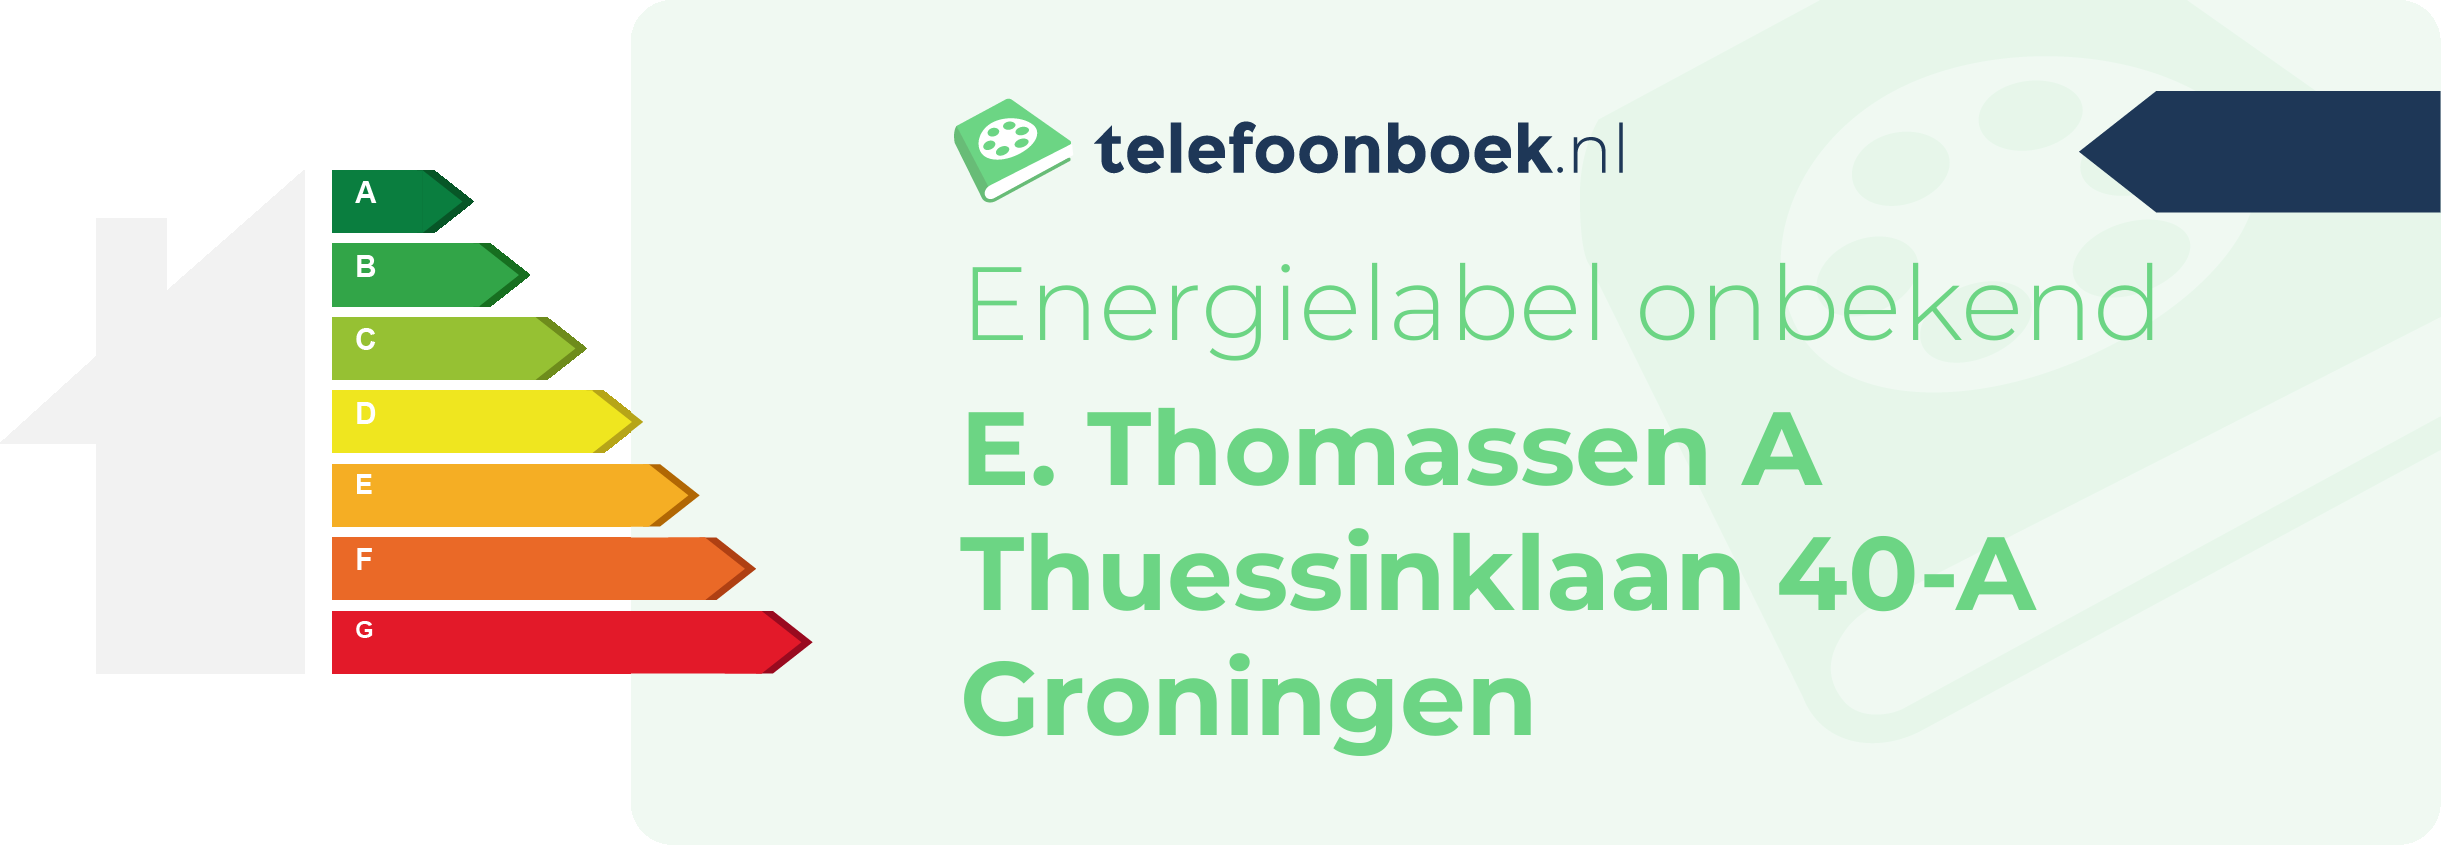 Energielabel E. Thomassen A Thuessinklaan 40-A Groningen